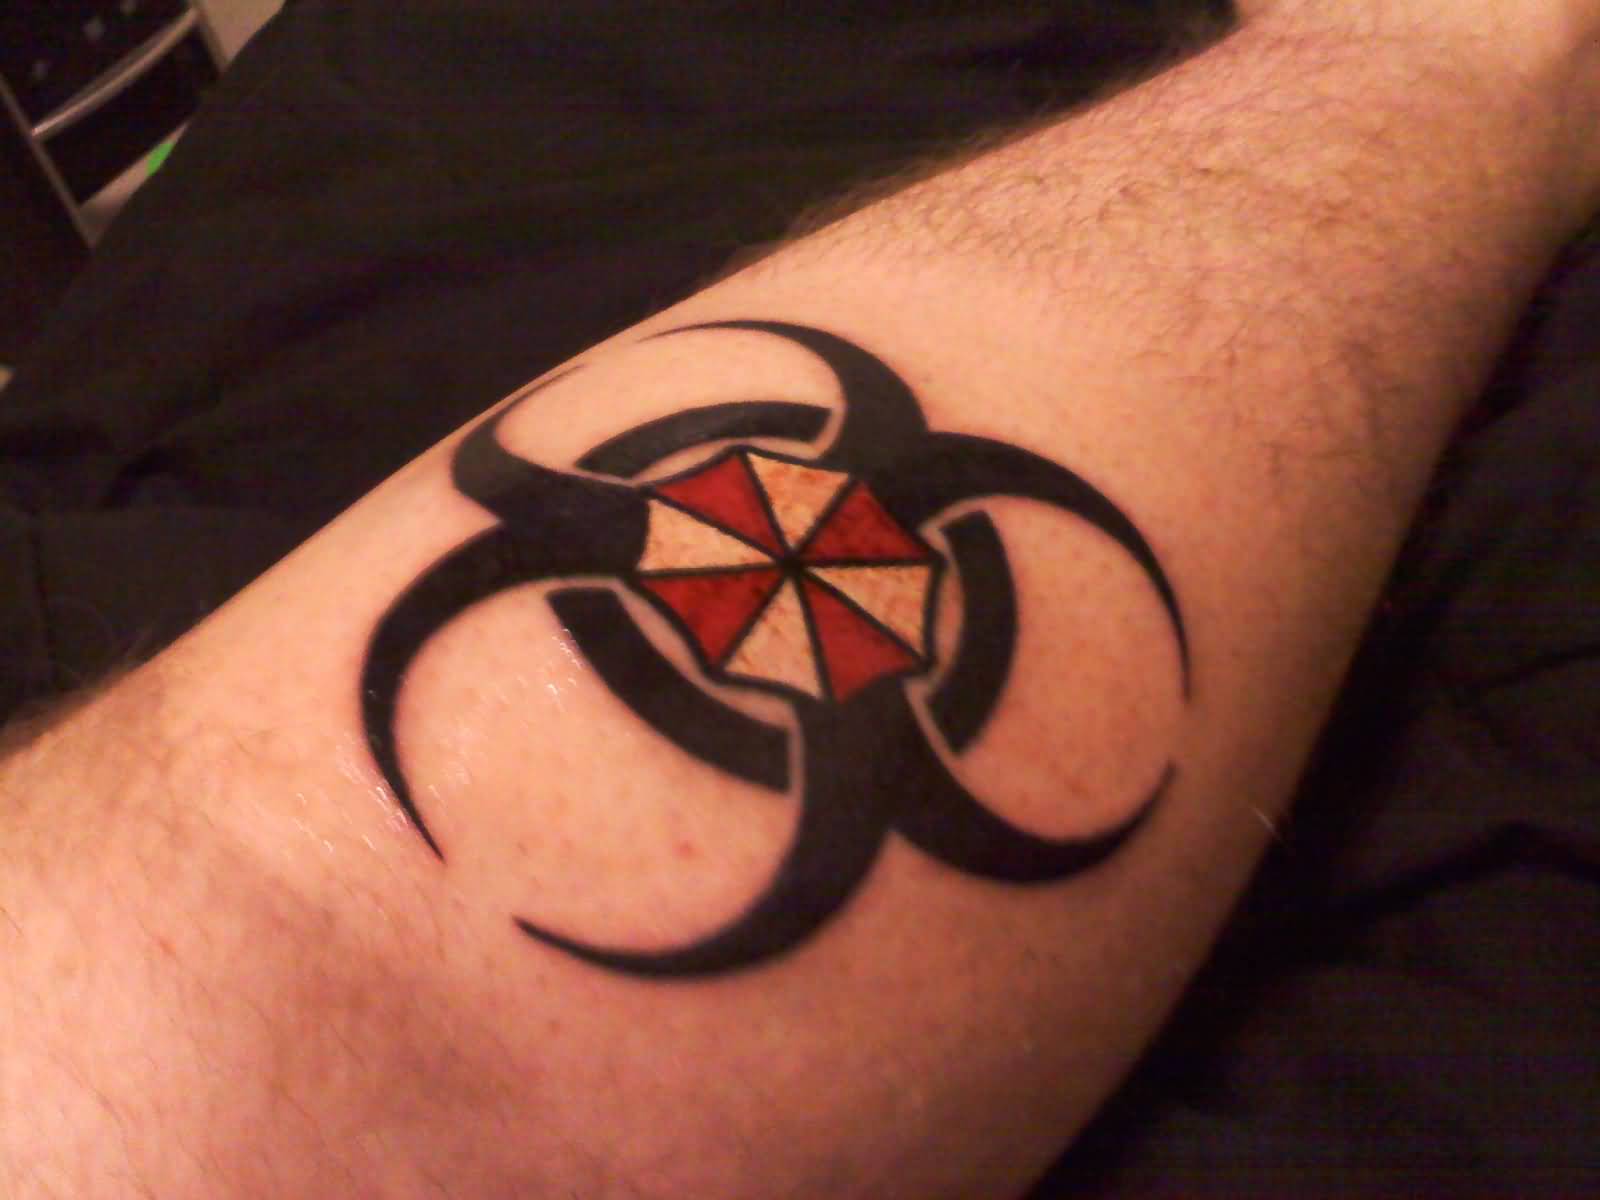 Resident Evil Umbrella Tattoo on Left Forearm by Tomatoman7